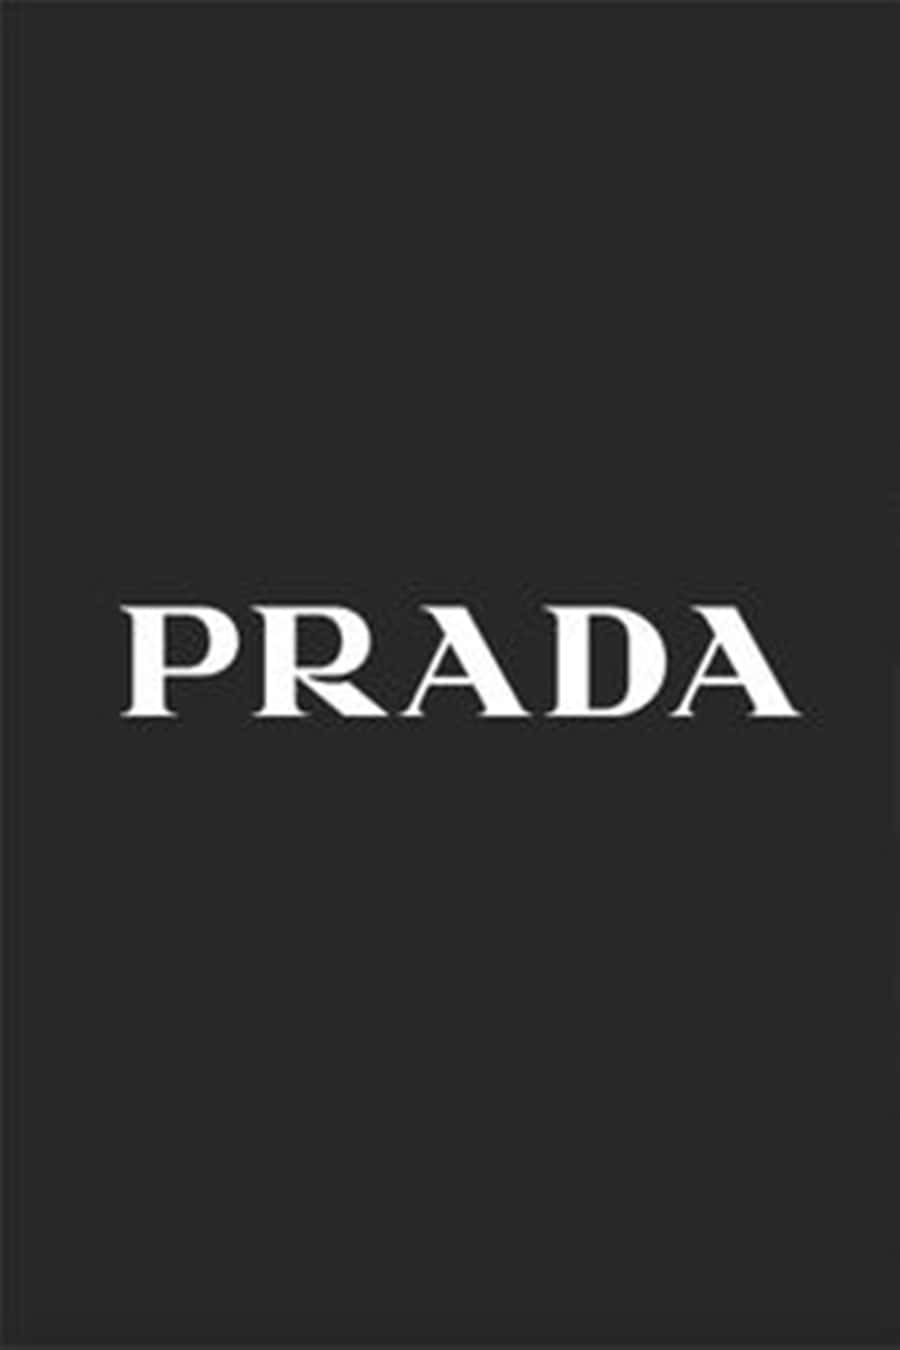 "Shop luxury Italian fashion with Prada, bringing dreaminess to reality."